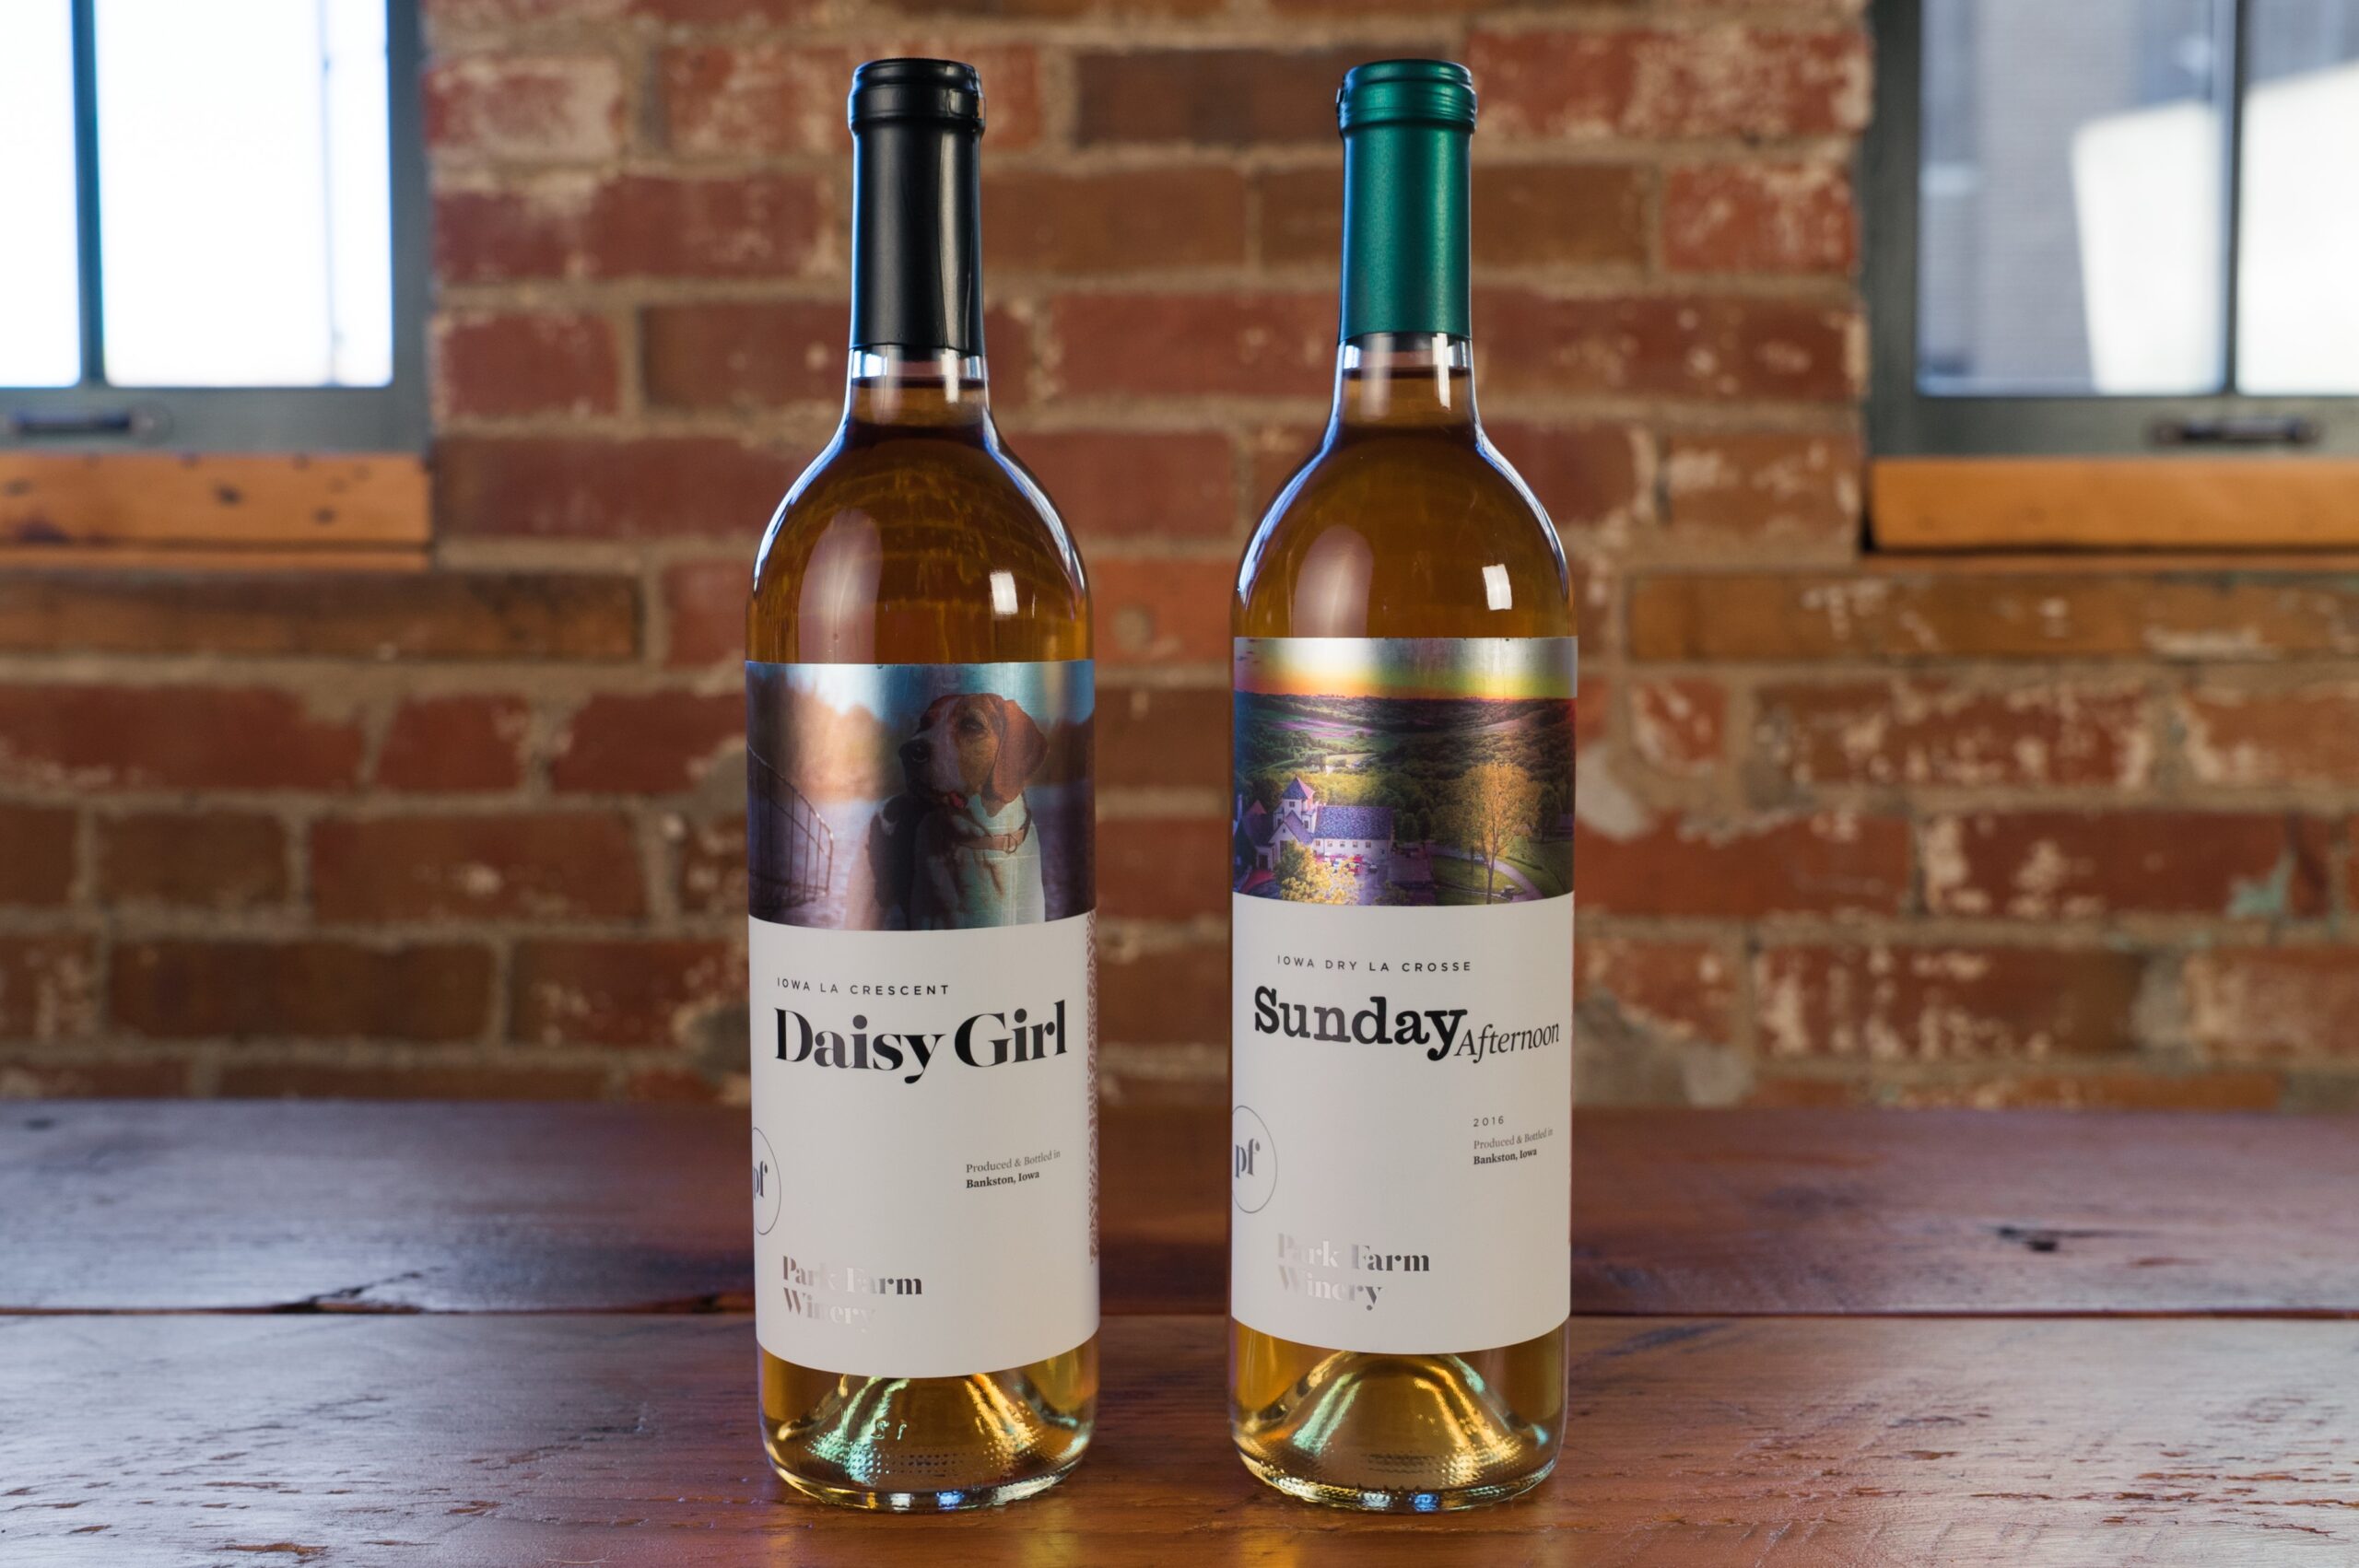 A modernized wine label from a digital printing company.